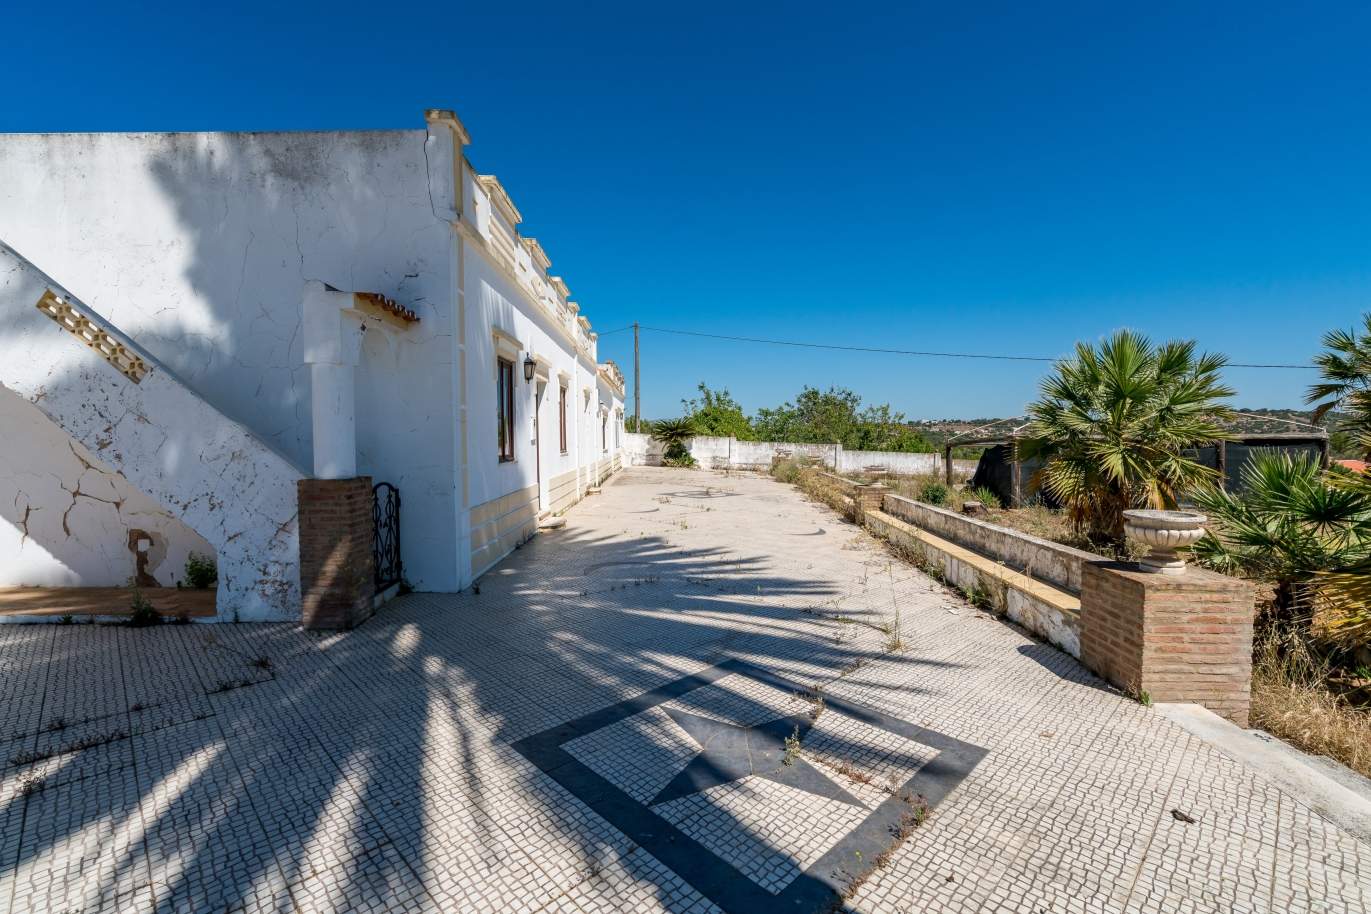 Immobilienverkauf in Alcantarilha, Silves, Algarve, Portugal_105713